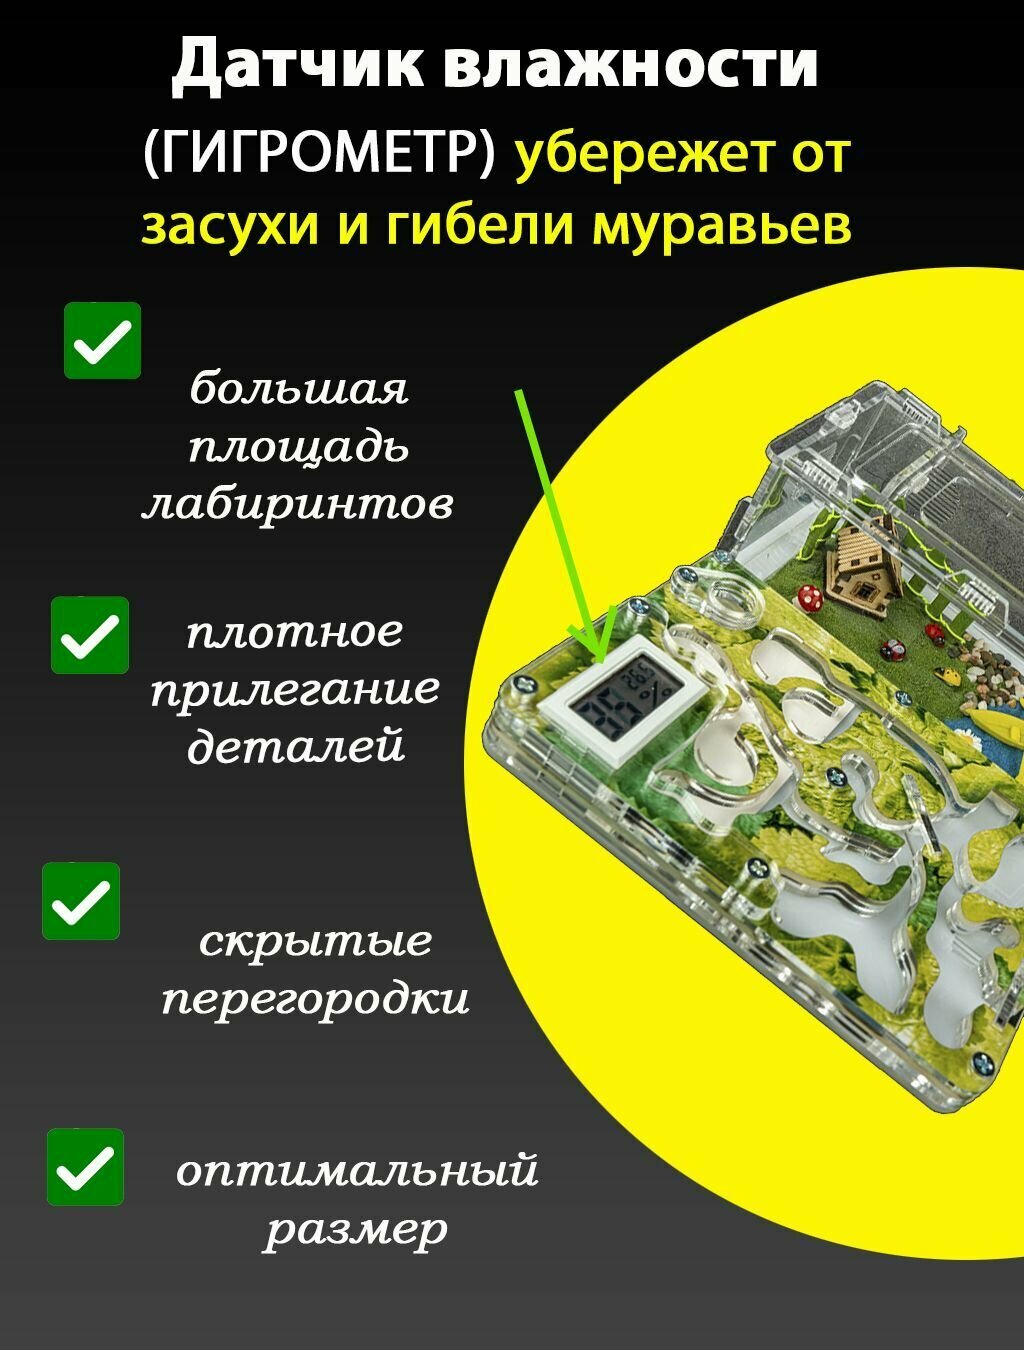 Муравьиная ферма (формикарий) стандарт с гигрометром AntFarmsNsk - фотография № 4